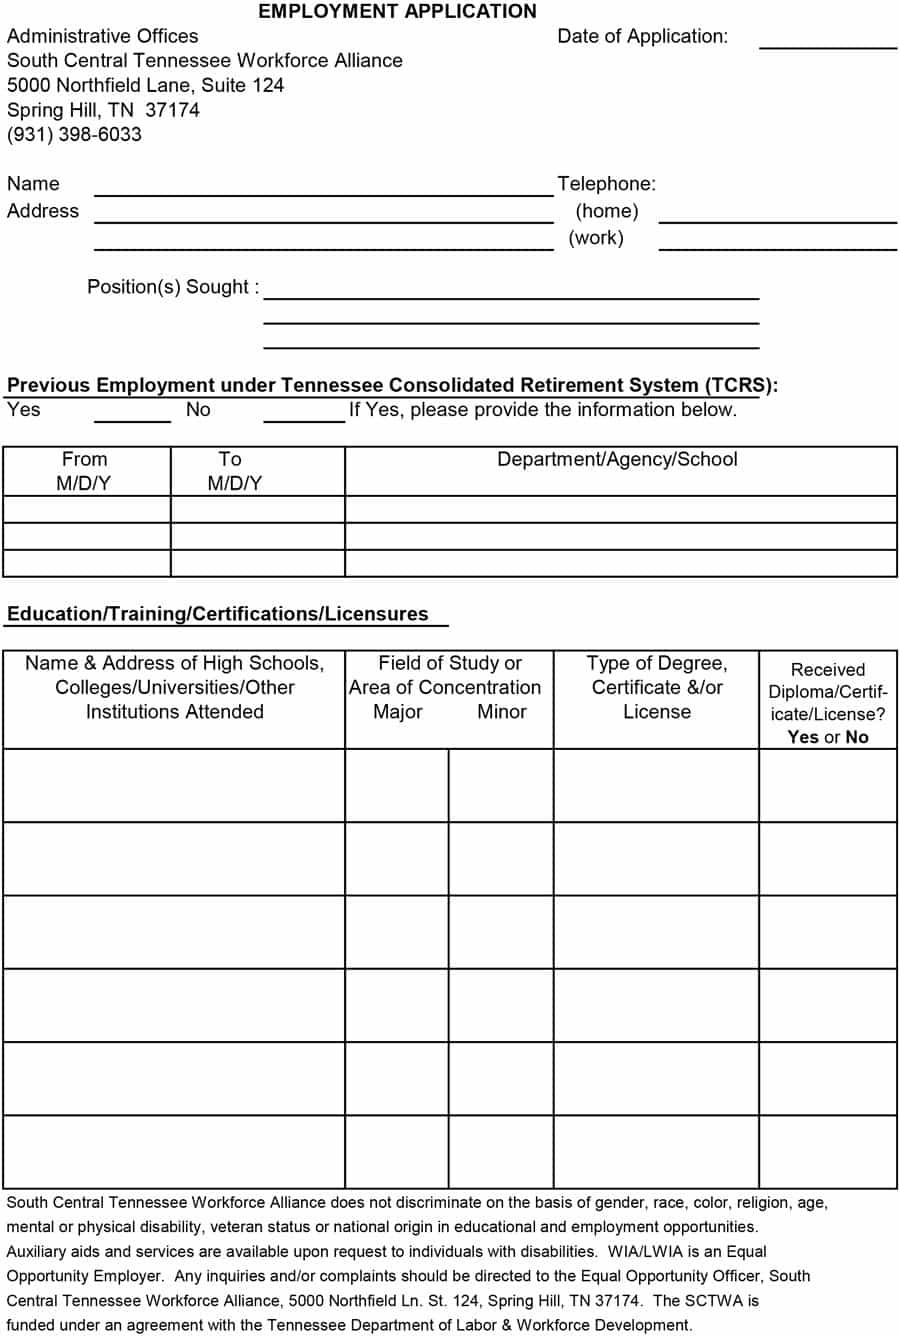 50 Free Employment / Job Application Form Templates [Printable] ᐅ - Free Printable Employment Application